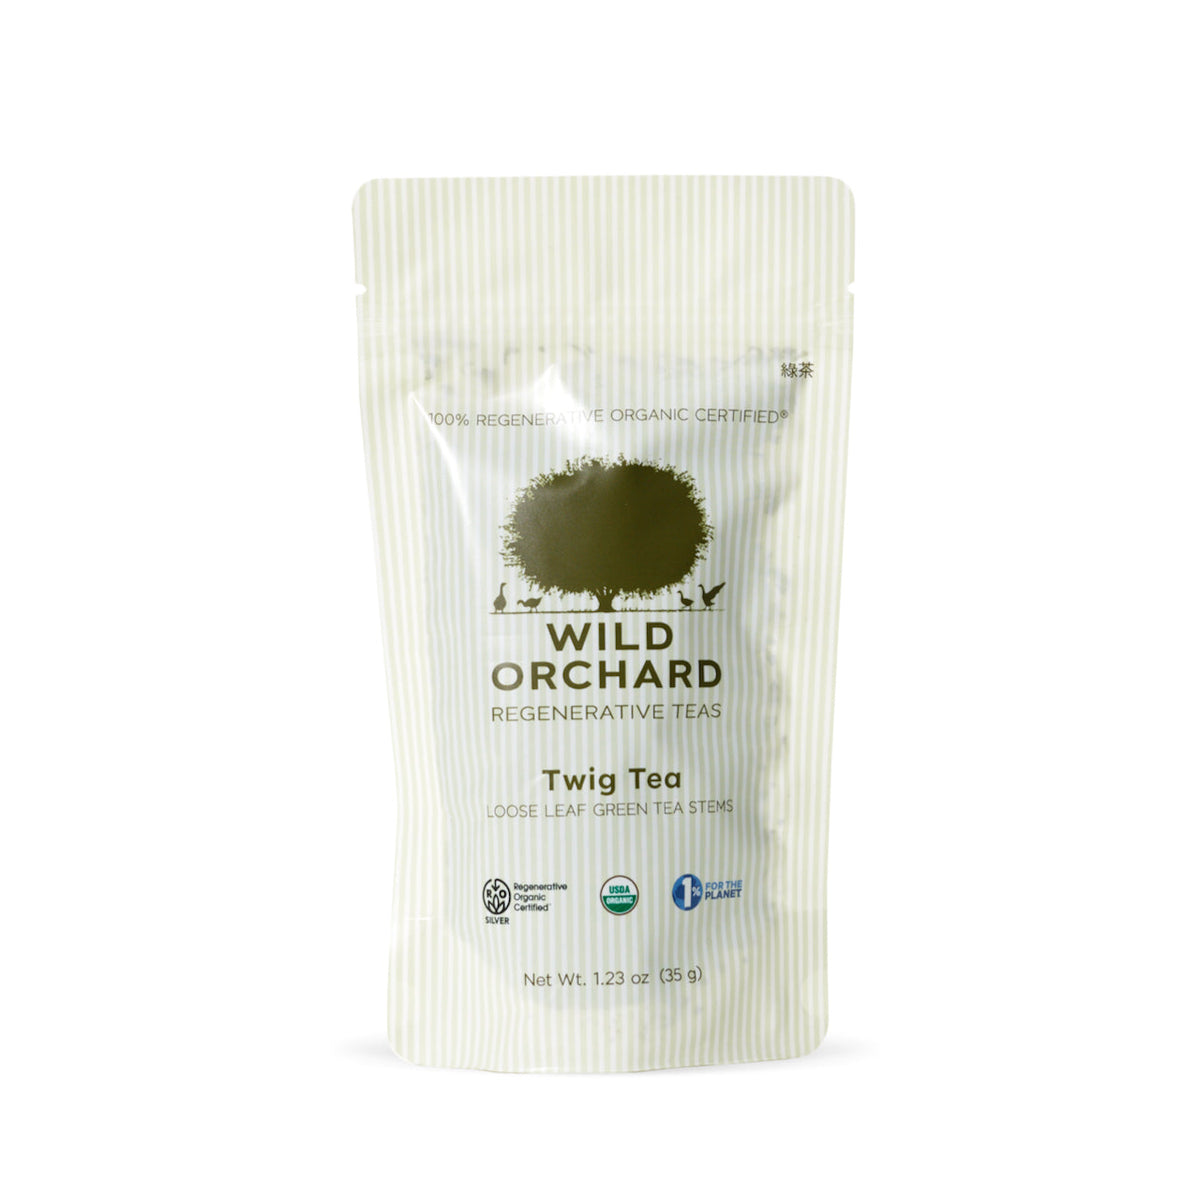 Wild Orchard Tea Twig Tea - Loose Leaf Bag - 6 Bags by Farm2Me